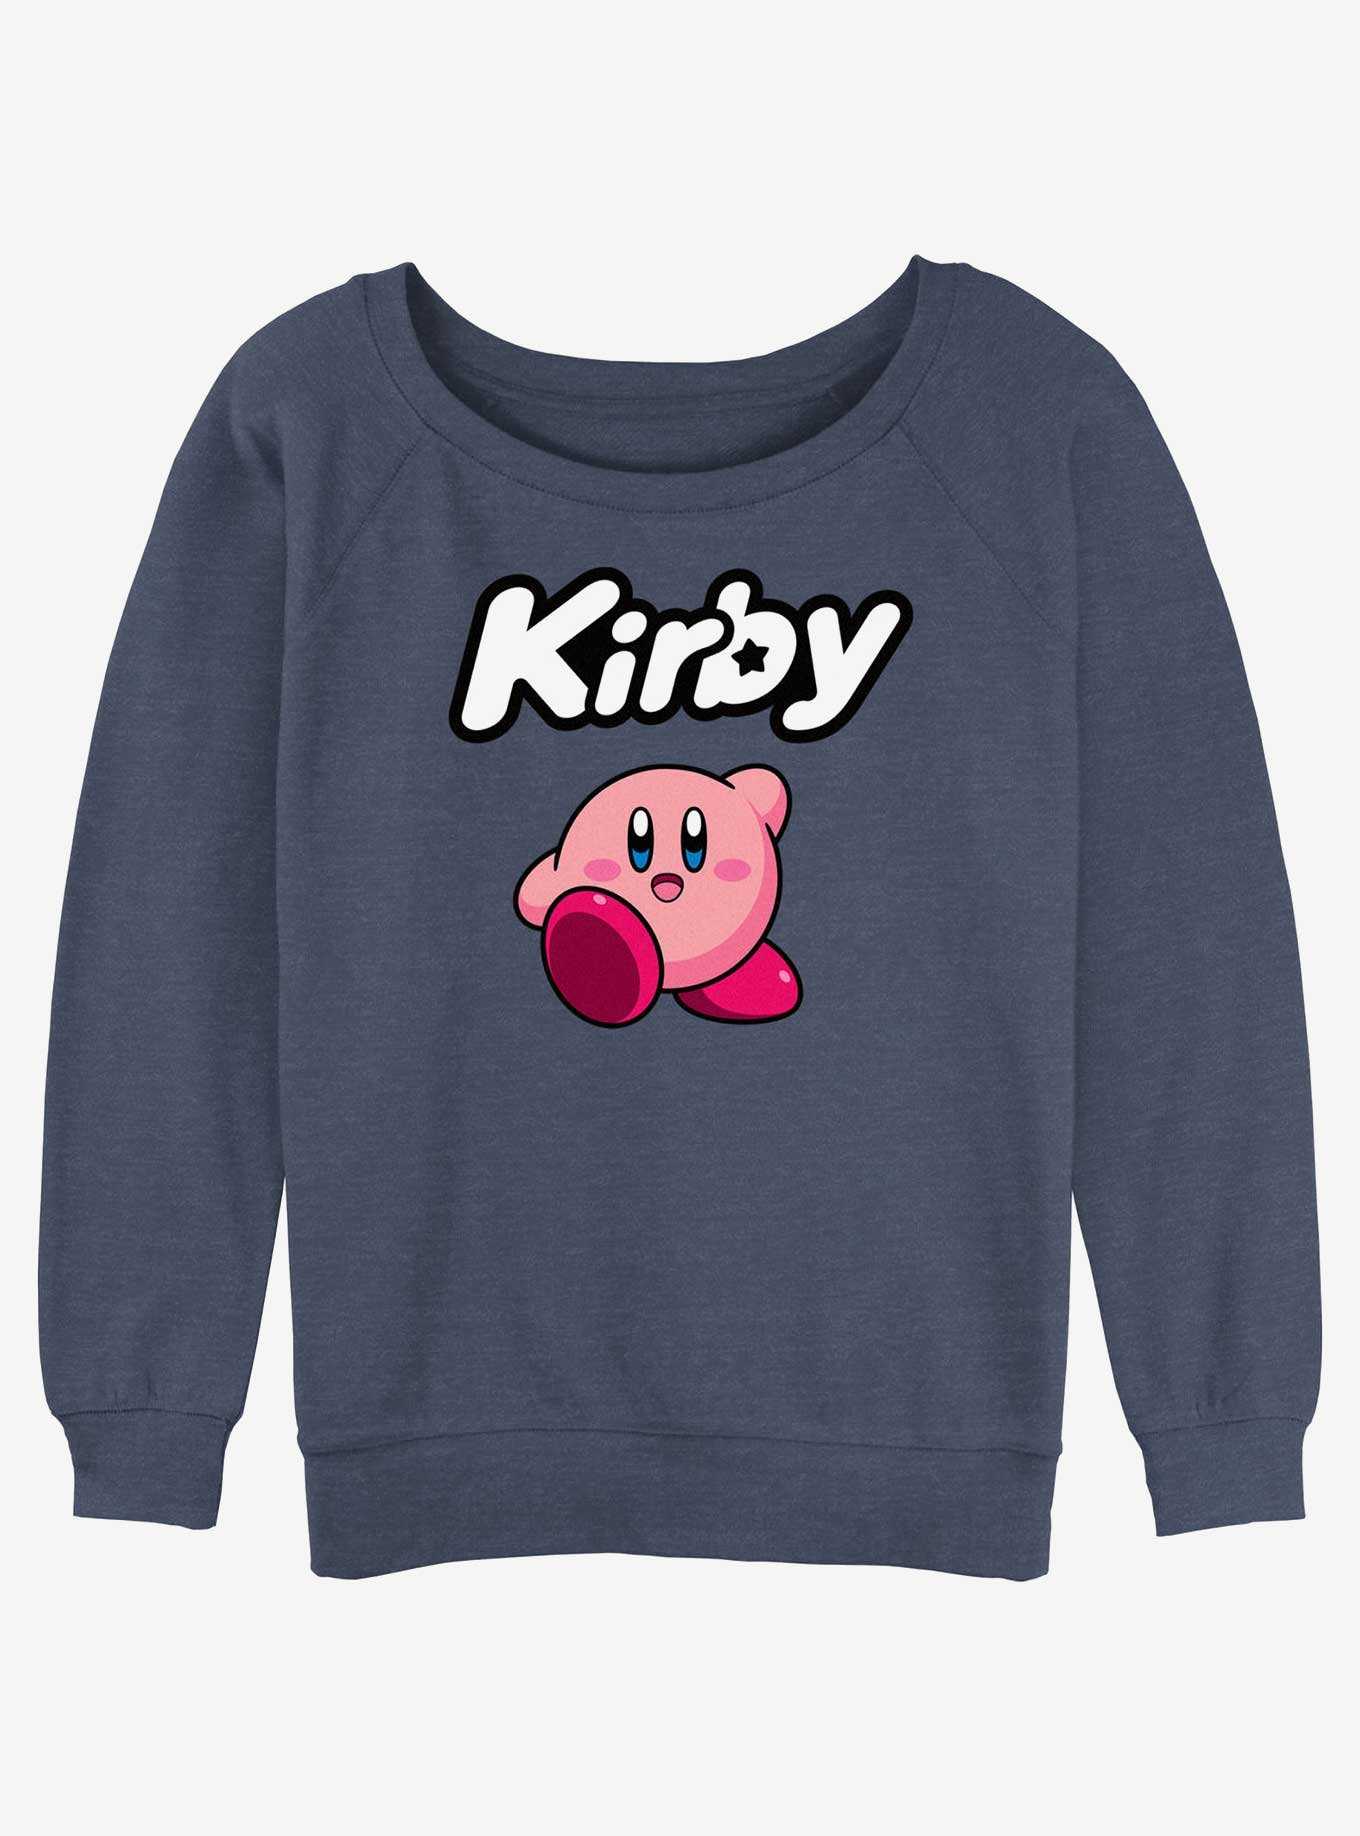 Kirby Pose Girls Slouchy Sweatshirt, , hi-res